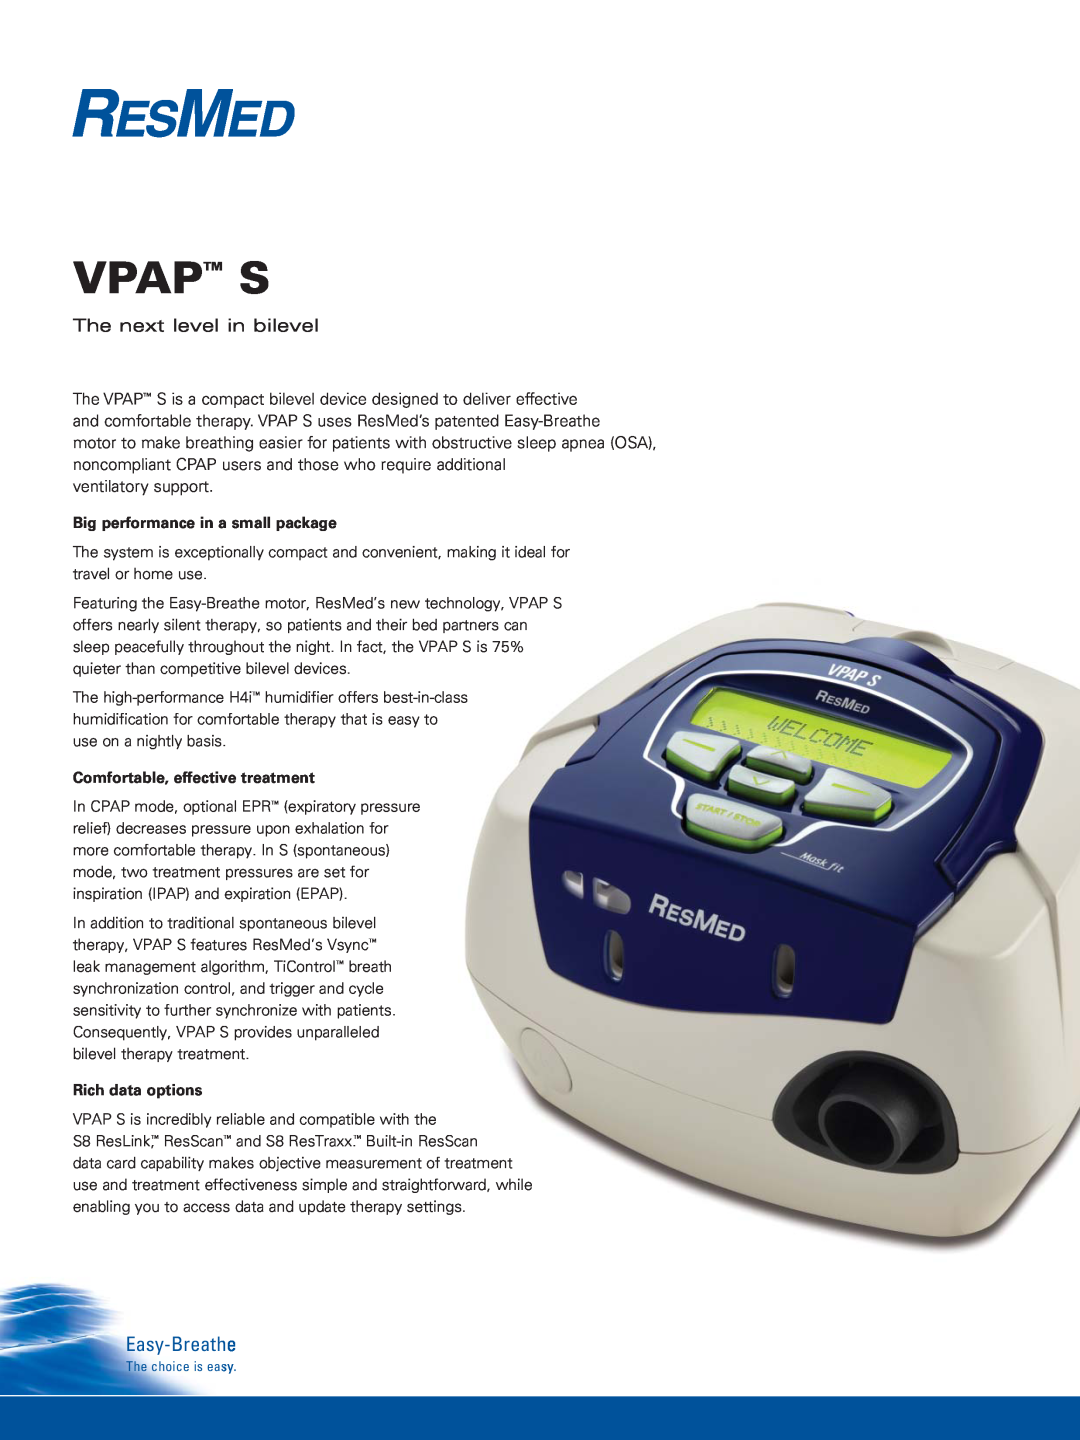 ResMed VPAP S manual Vpap S, Easy-Breathe, The next level in bilevel, ventilatory support 